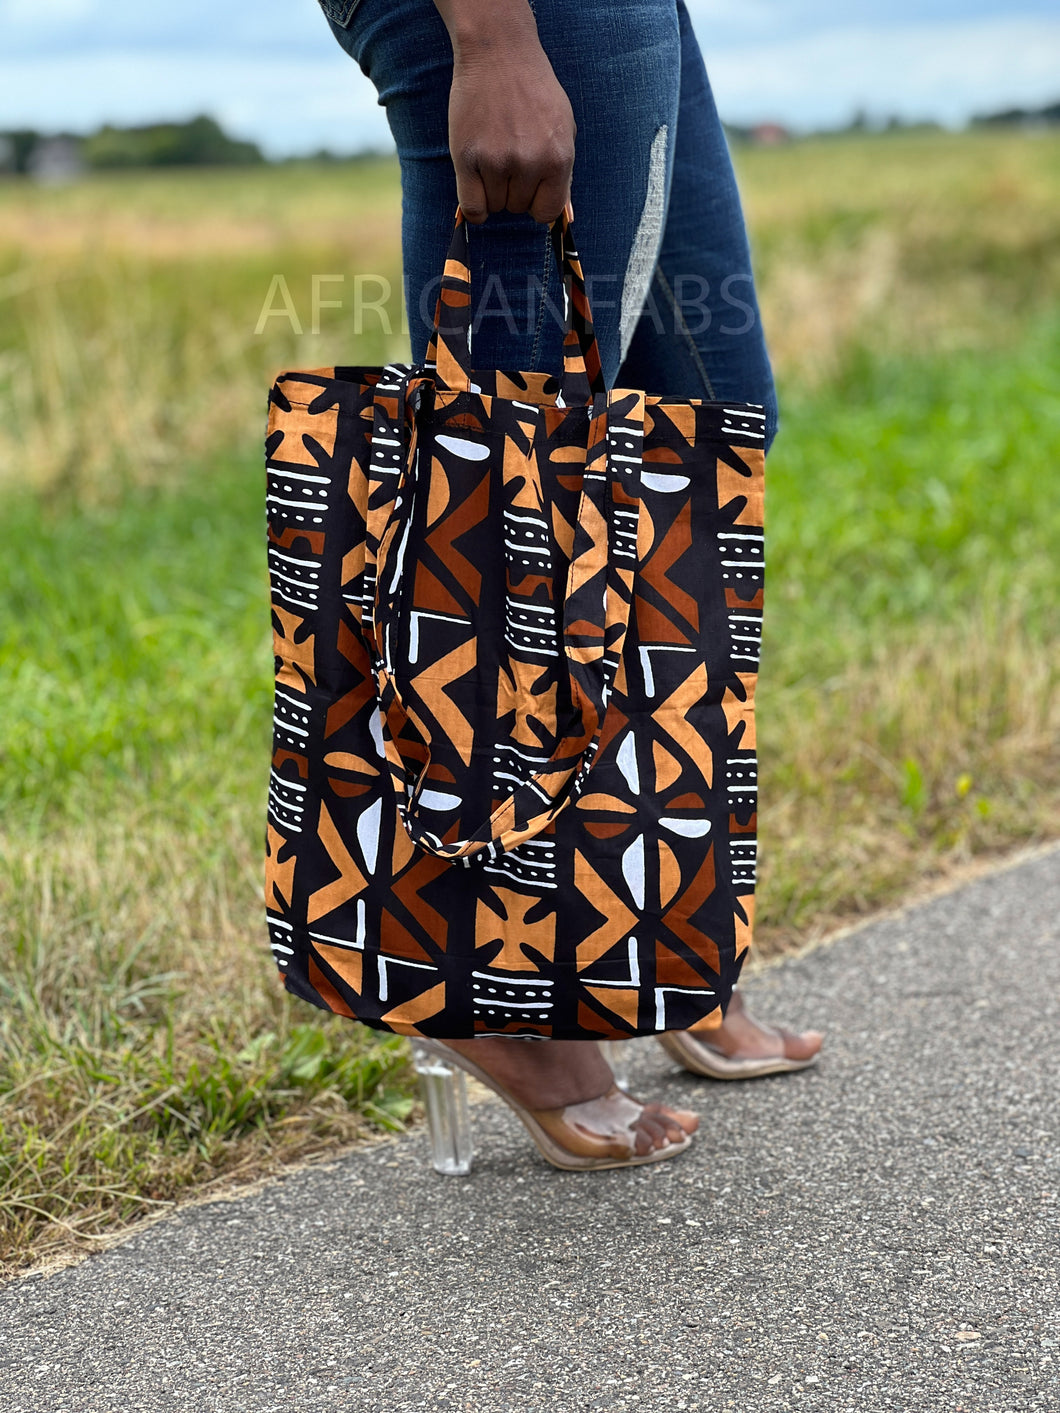 Shopper bag with African print - Brown bogolan - Reusable Shopping Bag made of cotton